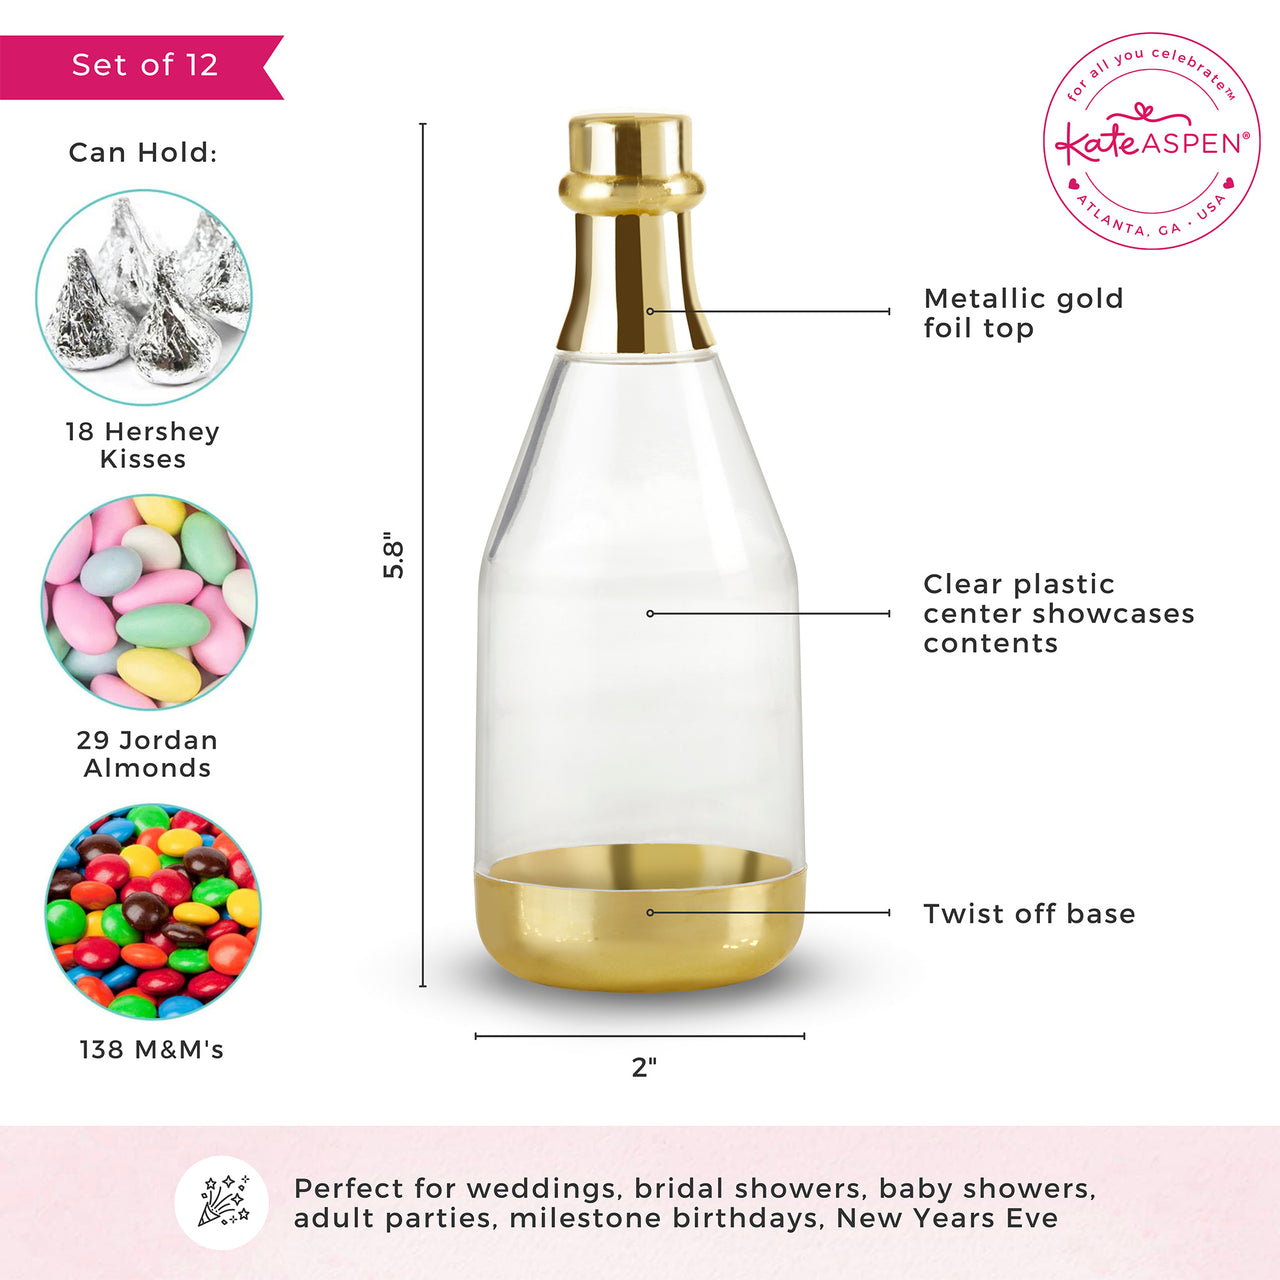 Gold Metallic Champagne Bottle Favor Container - Medium (Set of 12)